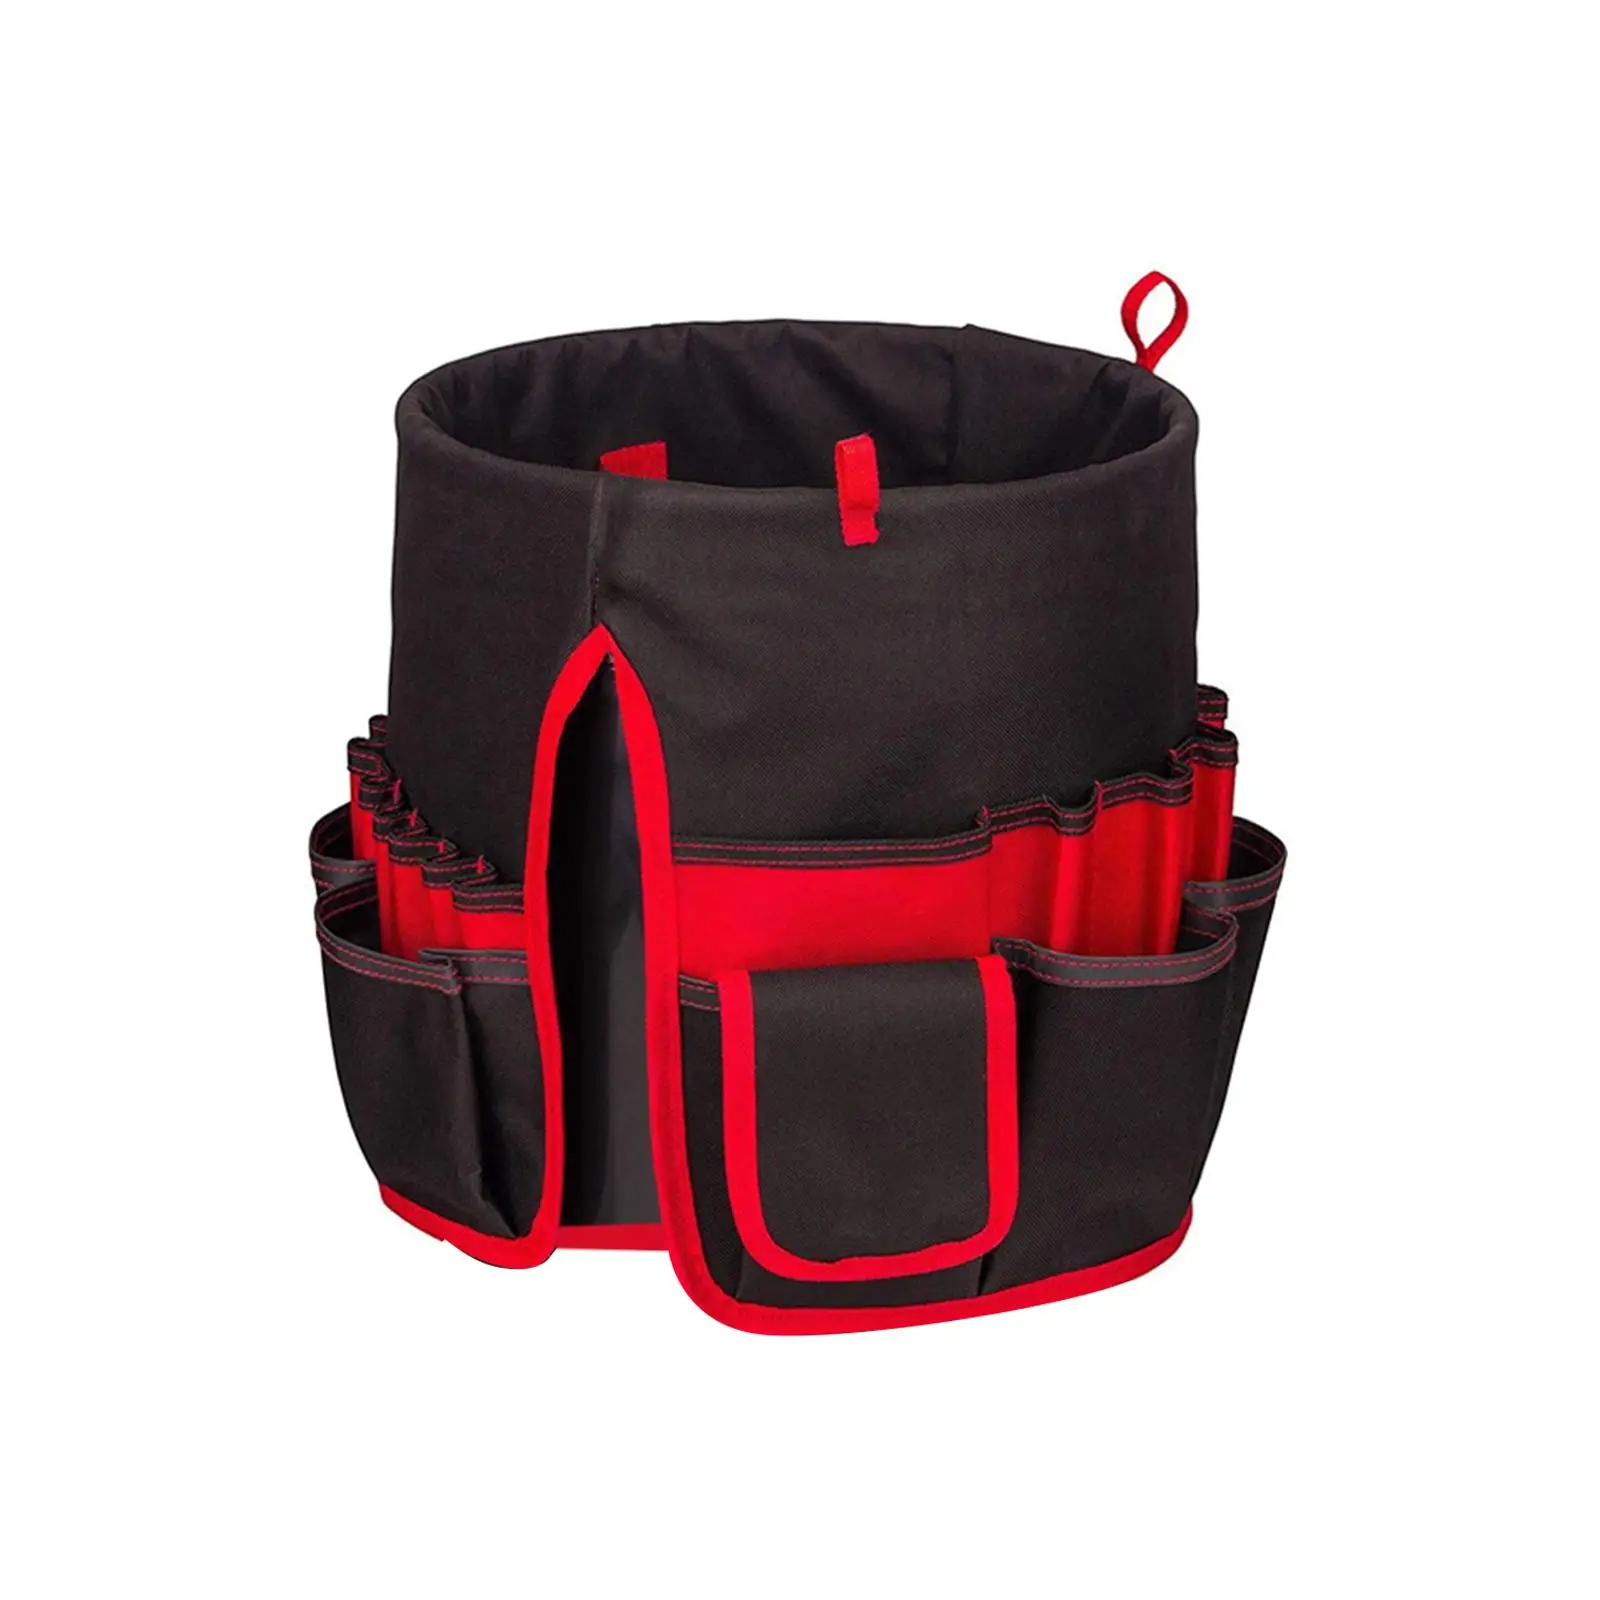 Gardening Tool Bag Bucket Organizer Heavy Duty Durable Handles Strap Practical Portable for Outdoor Gardening Woodworking Pocket